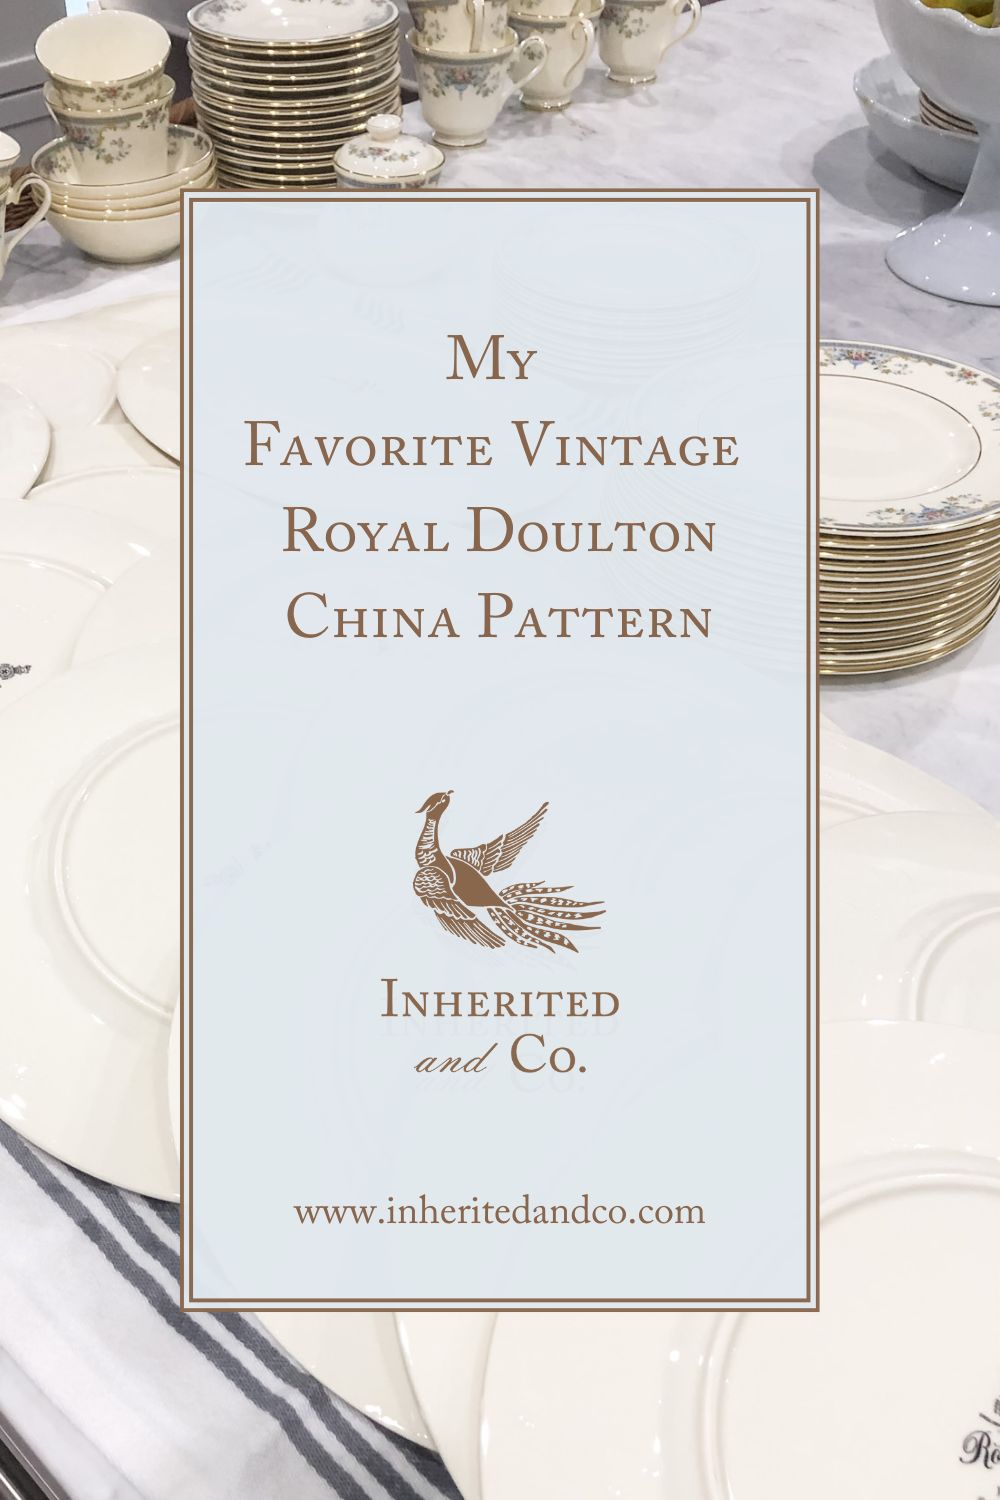 "My Favorite Vintage Royal Doulton China Pattern"